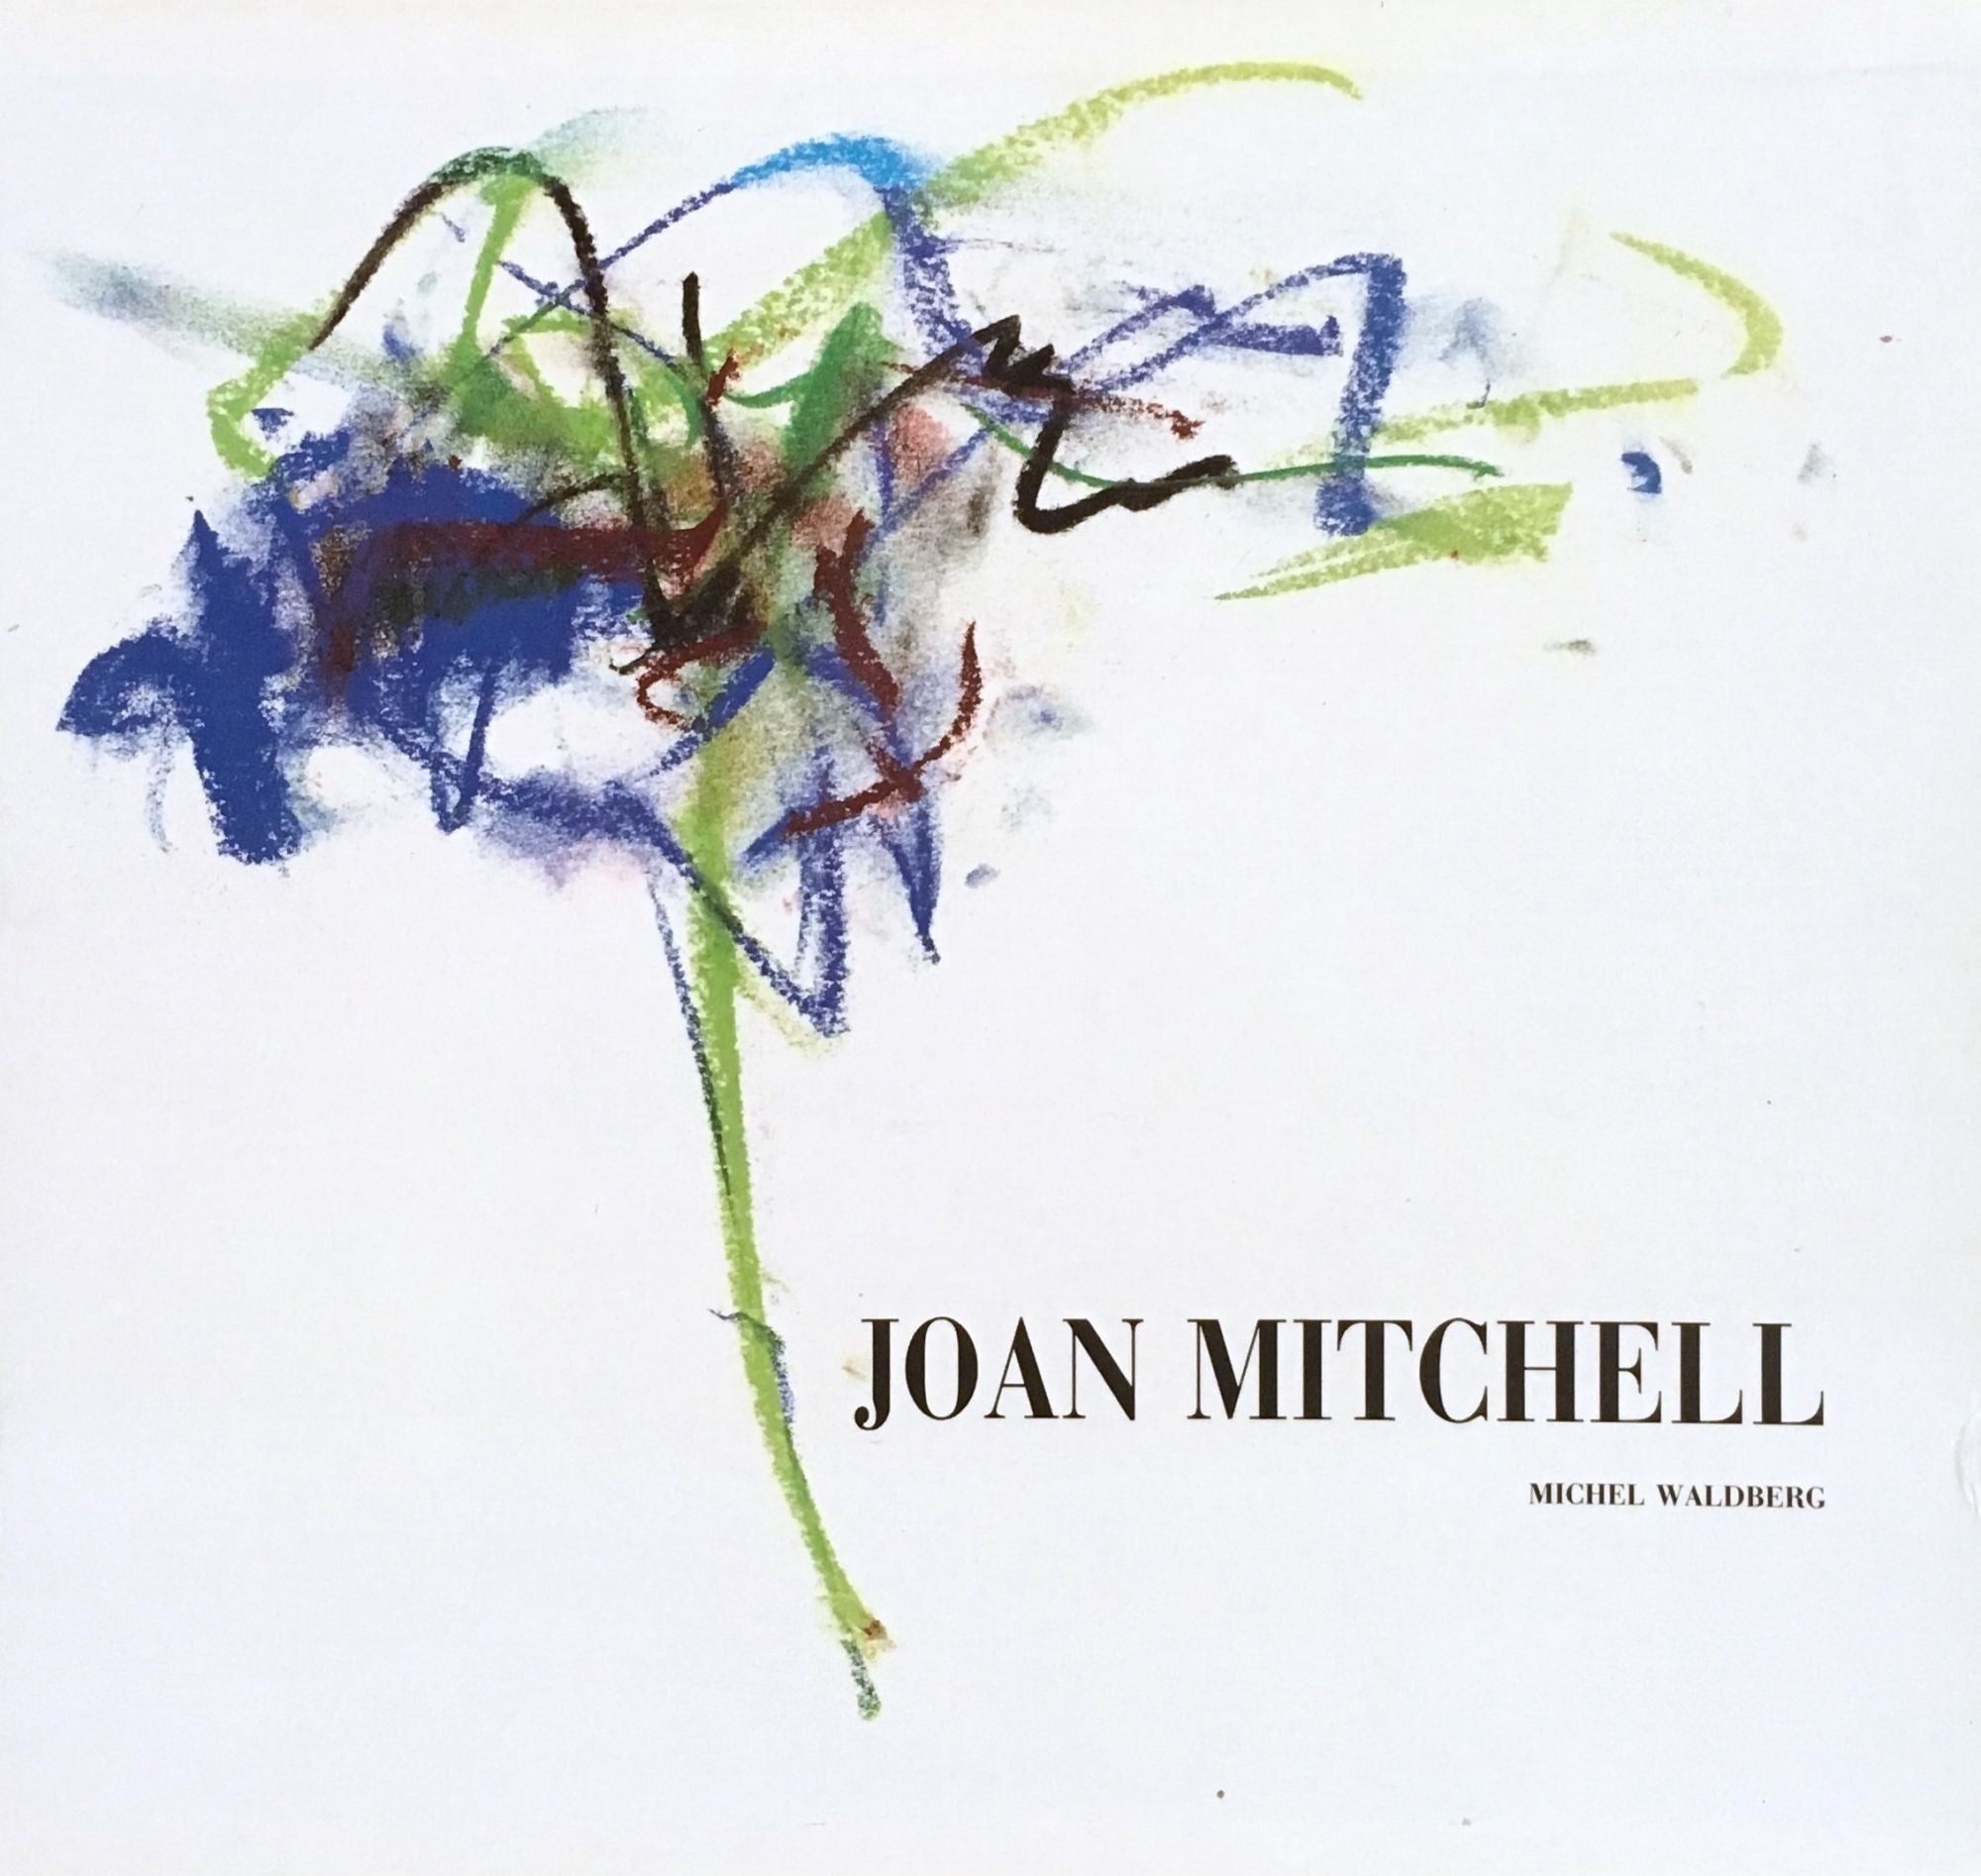 JOAN MITCHELL by Michel Waldberg on Ursus Books, Ltd